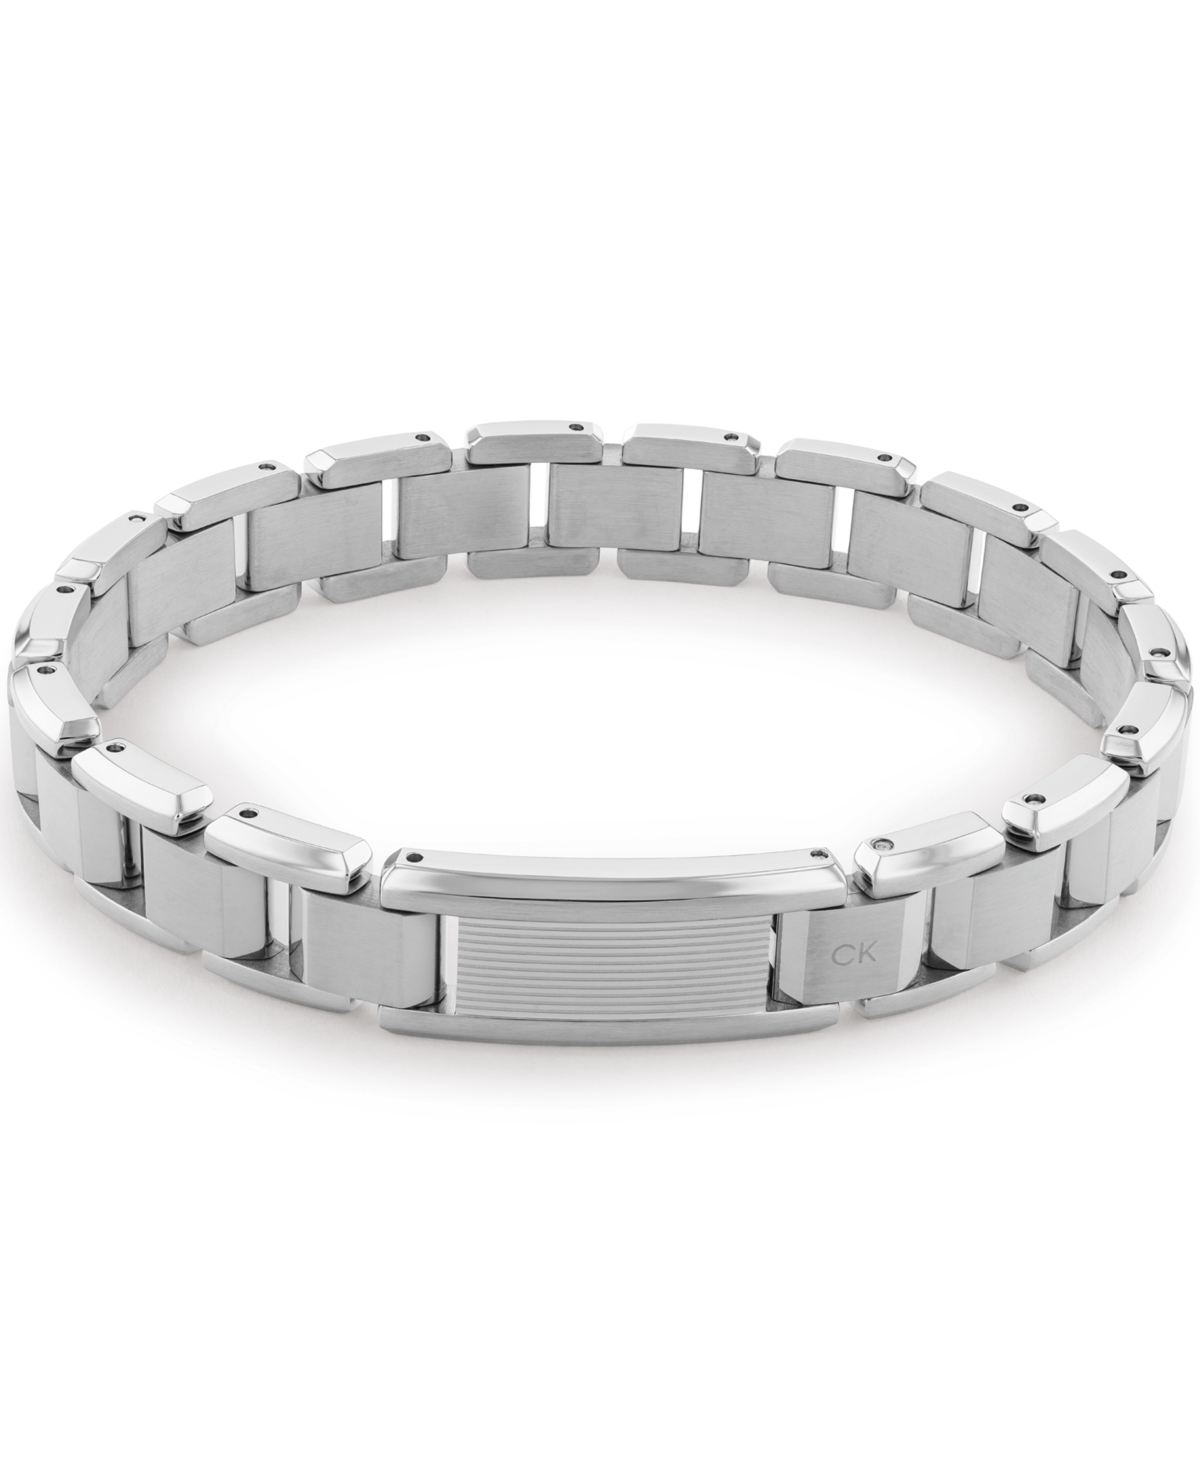 Men's Stainless Steel Link Bracelet - Silver